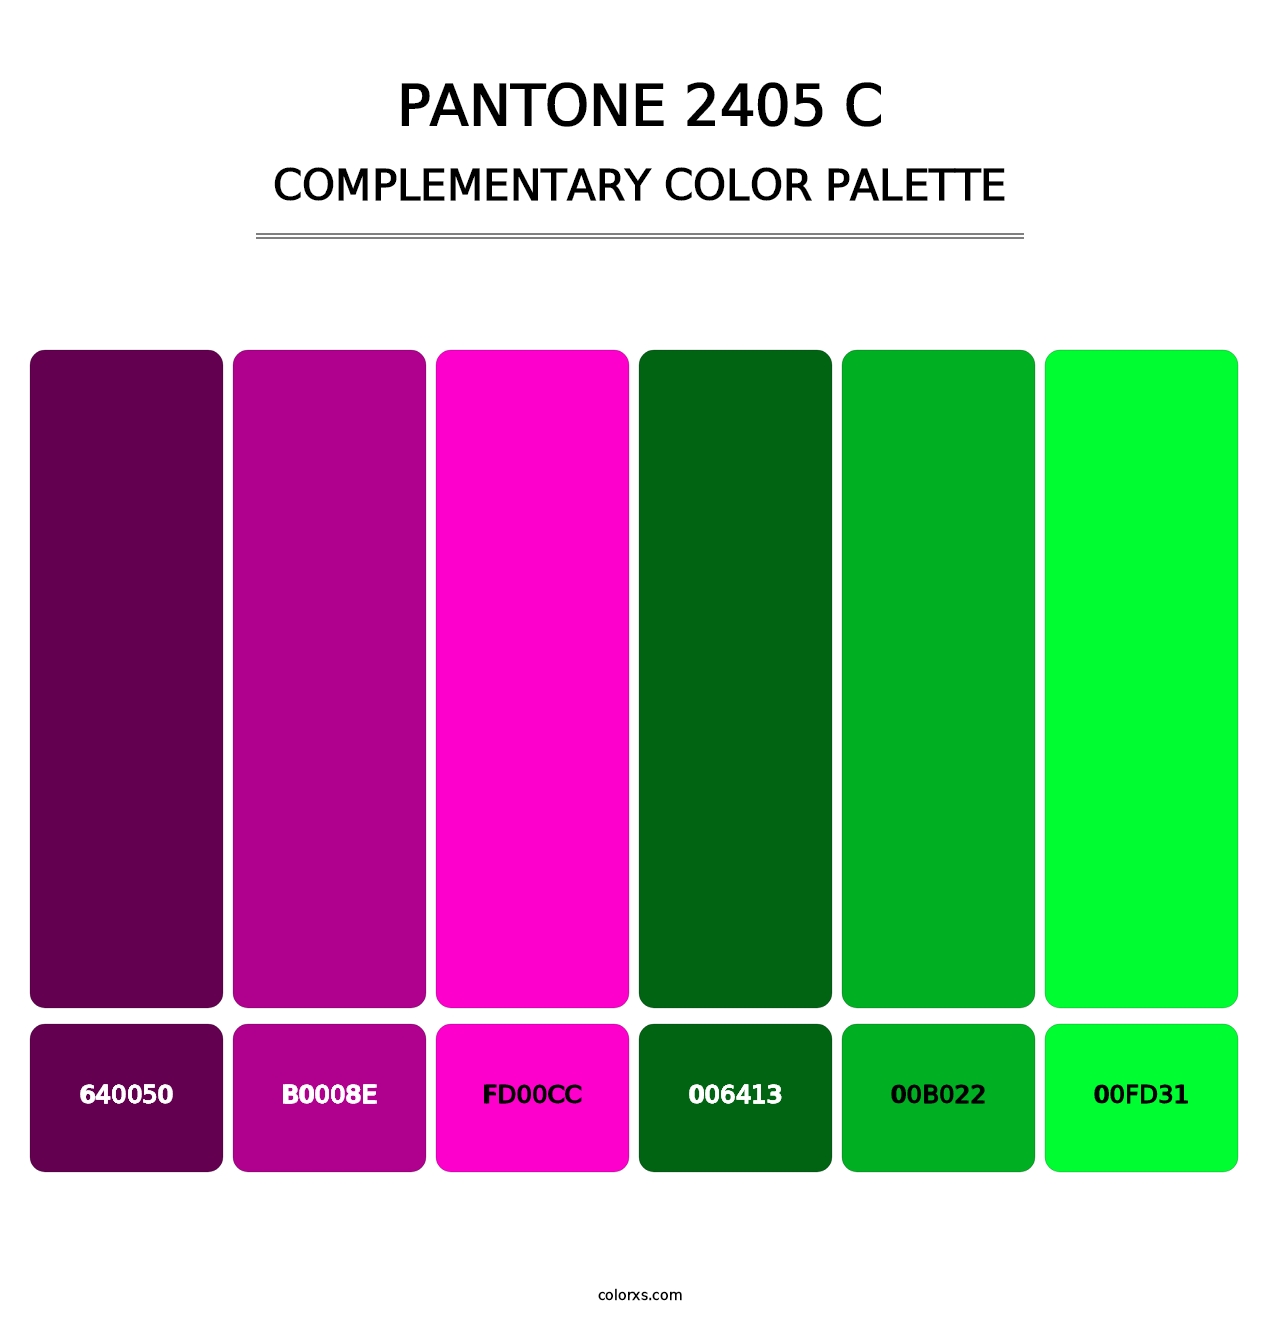 PANTONE 2405 C - Complementary Color Palette